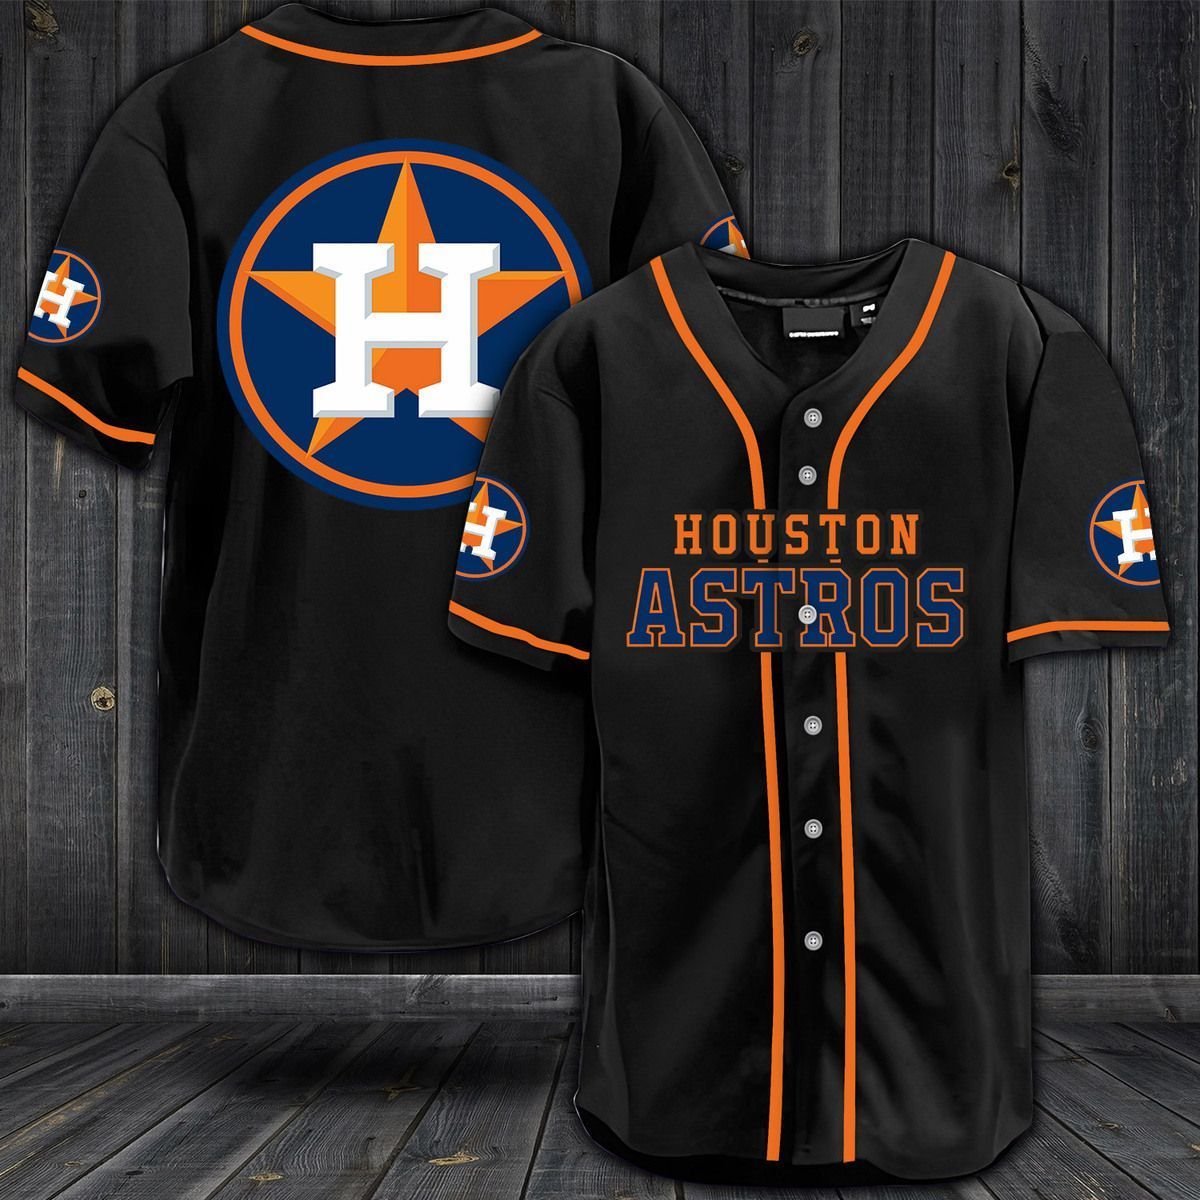 Houston Astros MLB baseball jersey shirt – Saleoff 251221